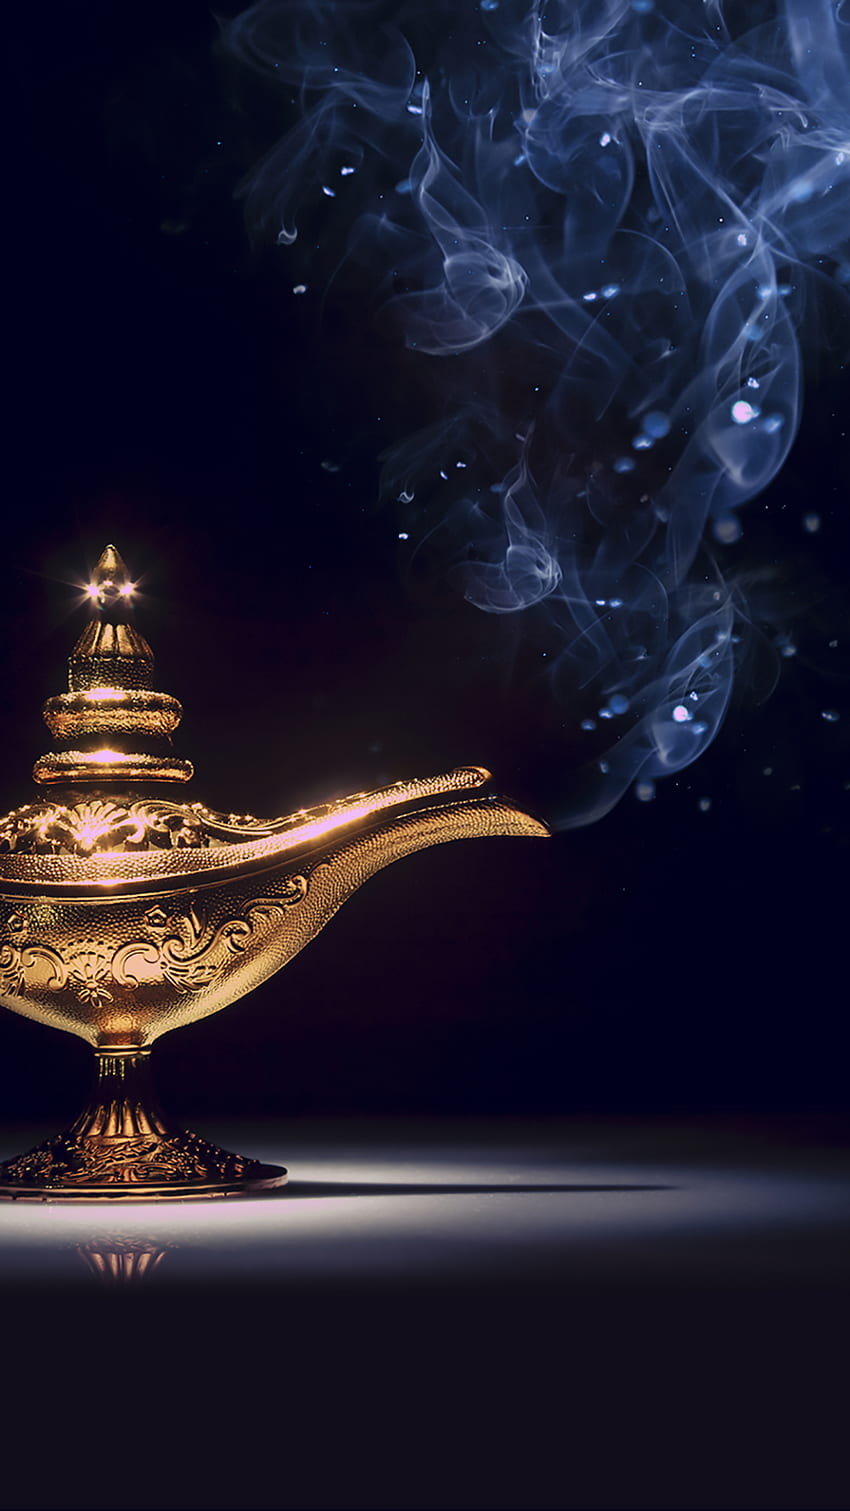 Ƒ↑TAP DAN DAPATKAN APLIKASINYA! Seni Kreatif Lampu Aladdin, Kehidupan Ajaib wallpaper ponsel HD